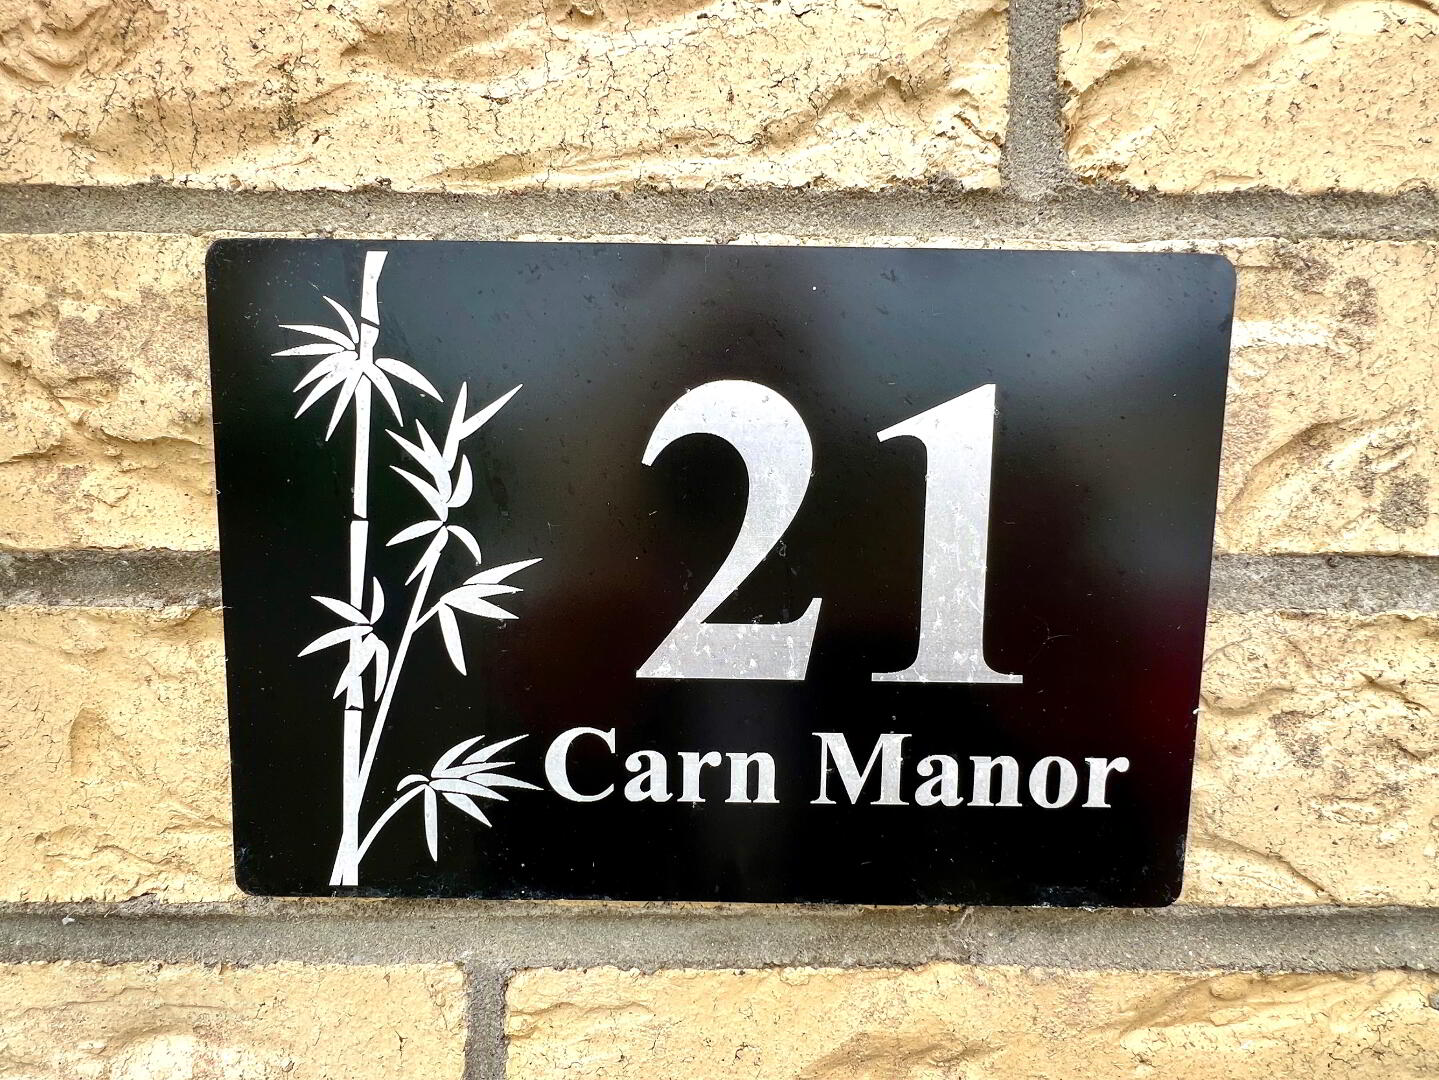 21 Carn Manor